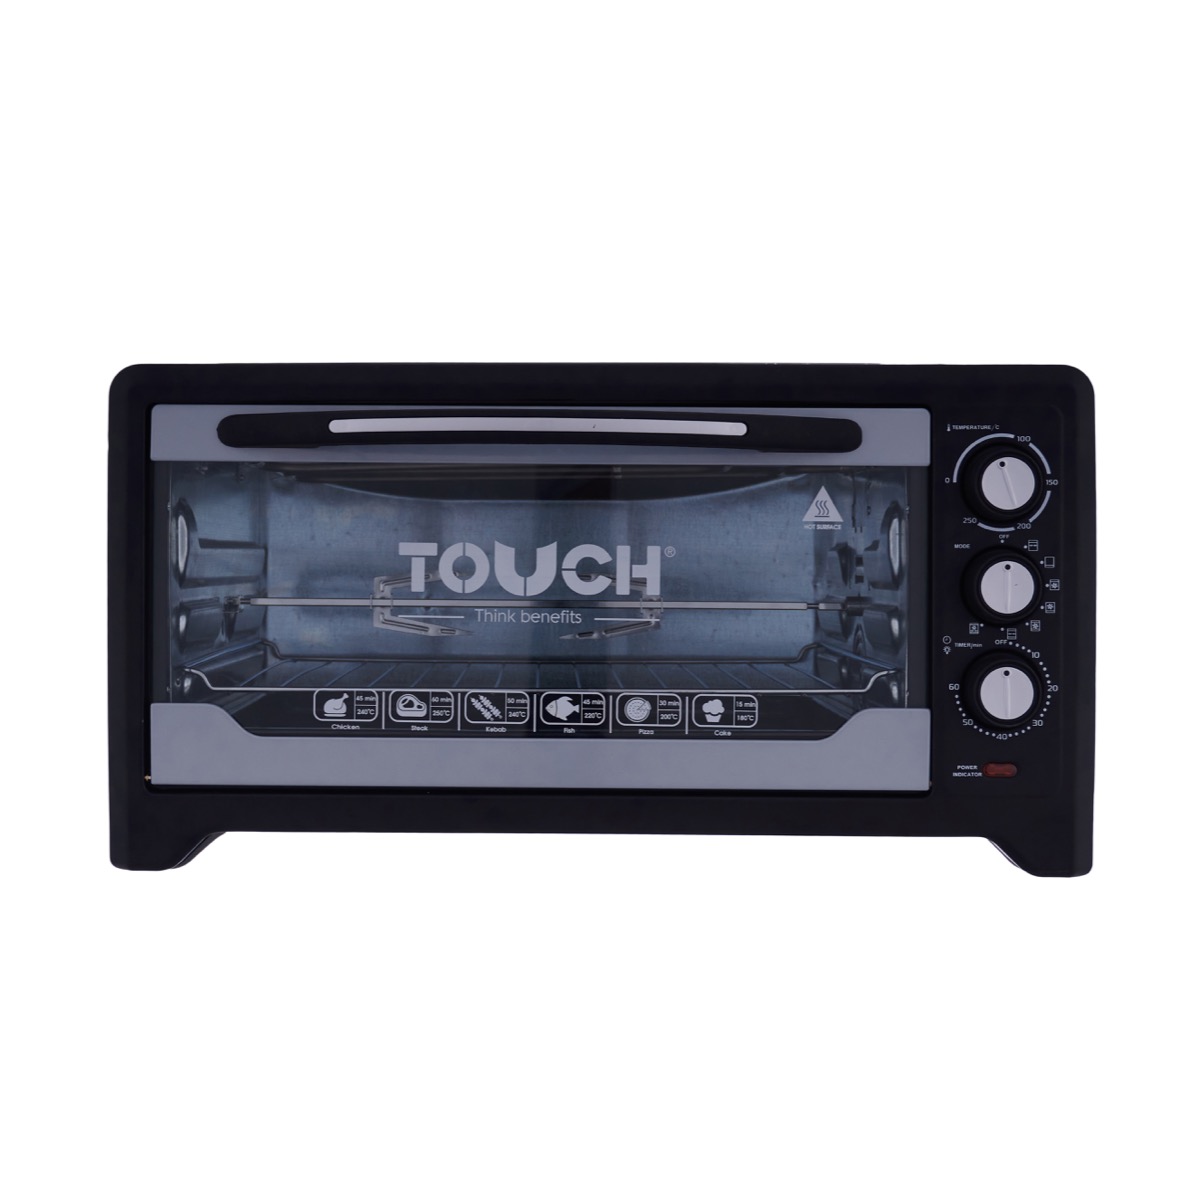 Touch El Zenouki Electric Oven with Grill, 50 liter, 2000 Watt, Black - 40618